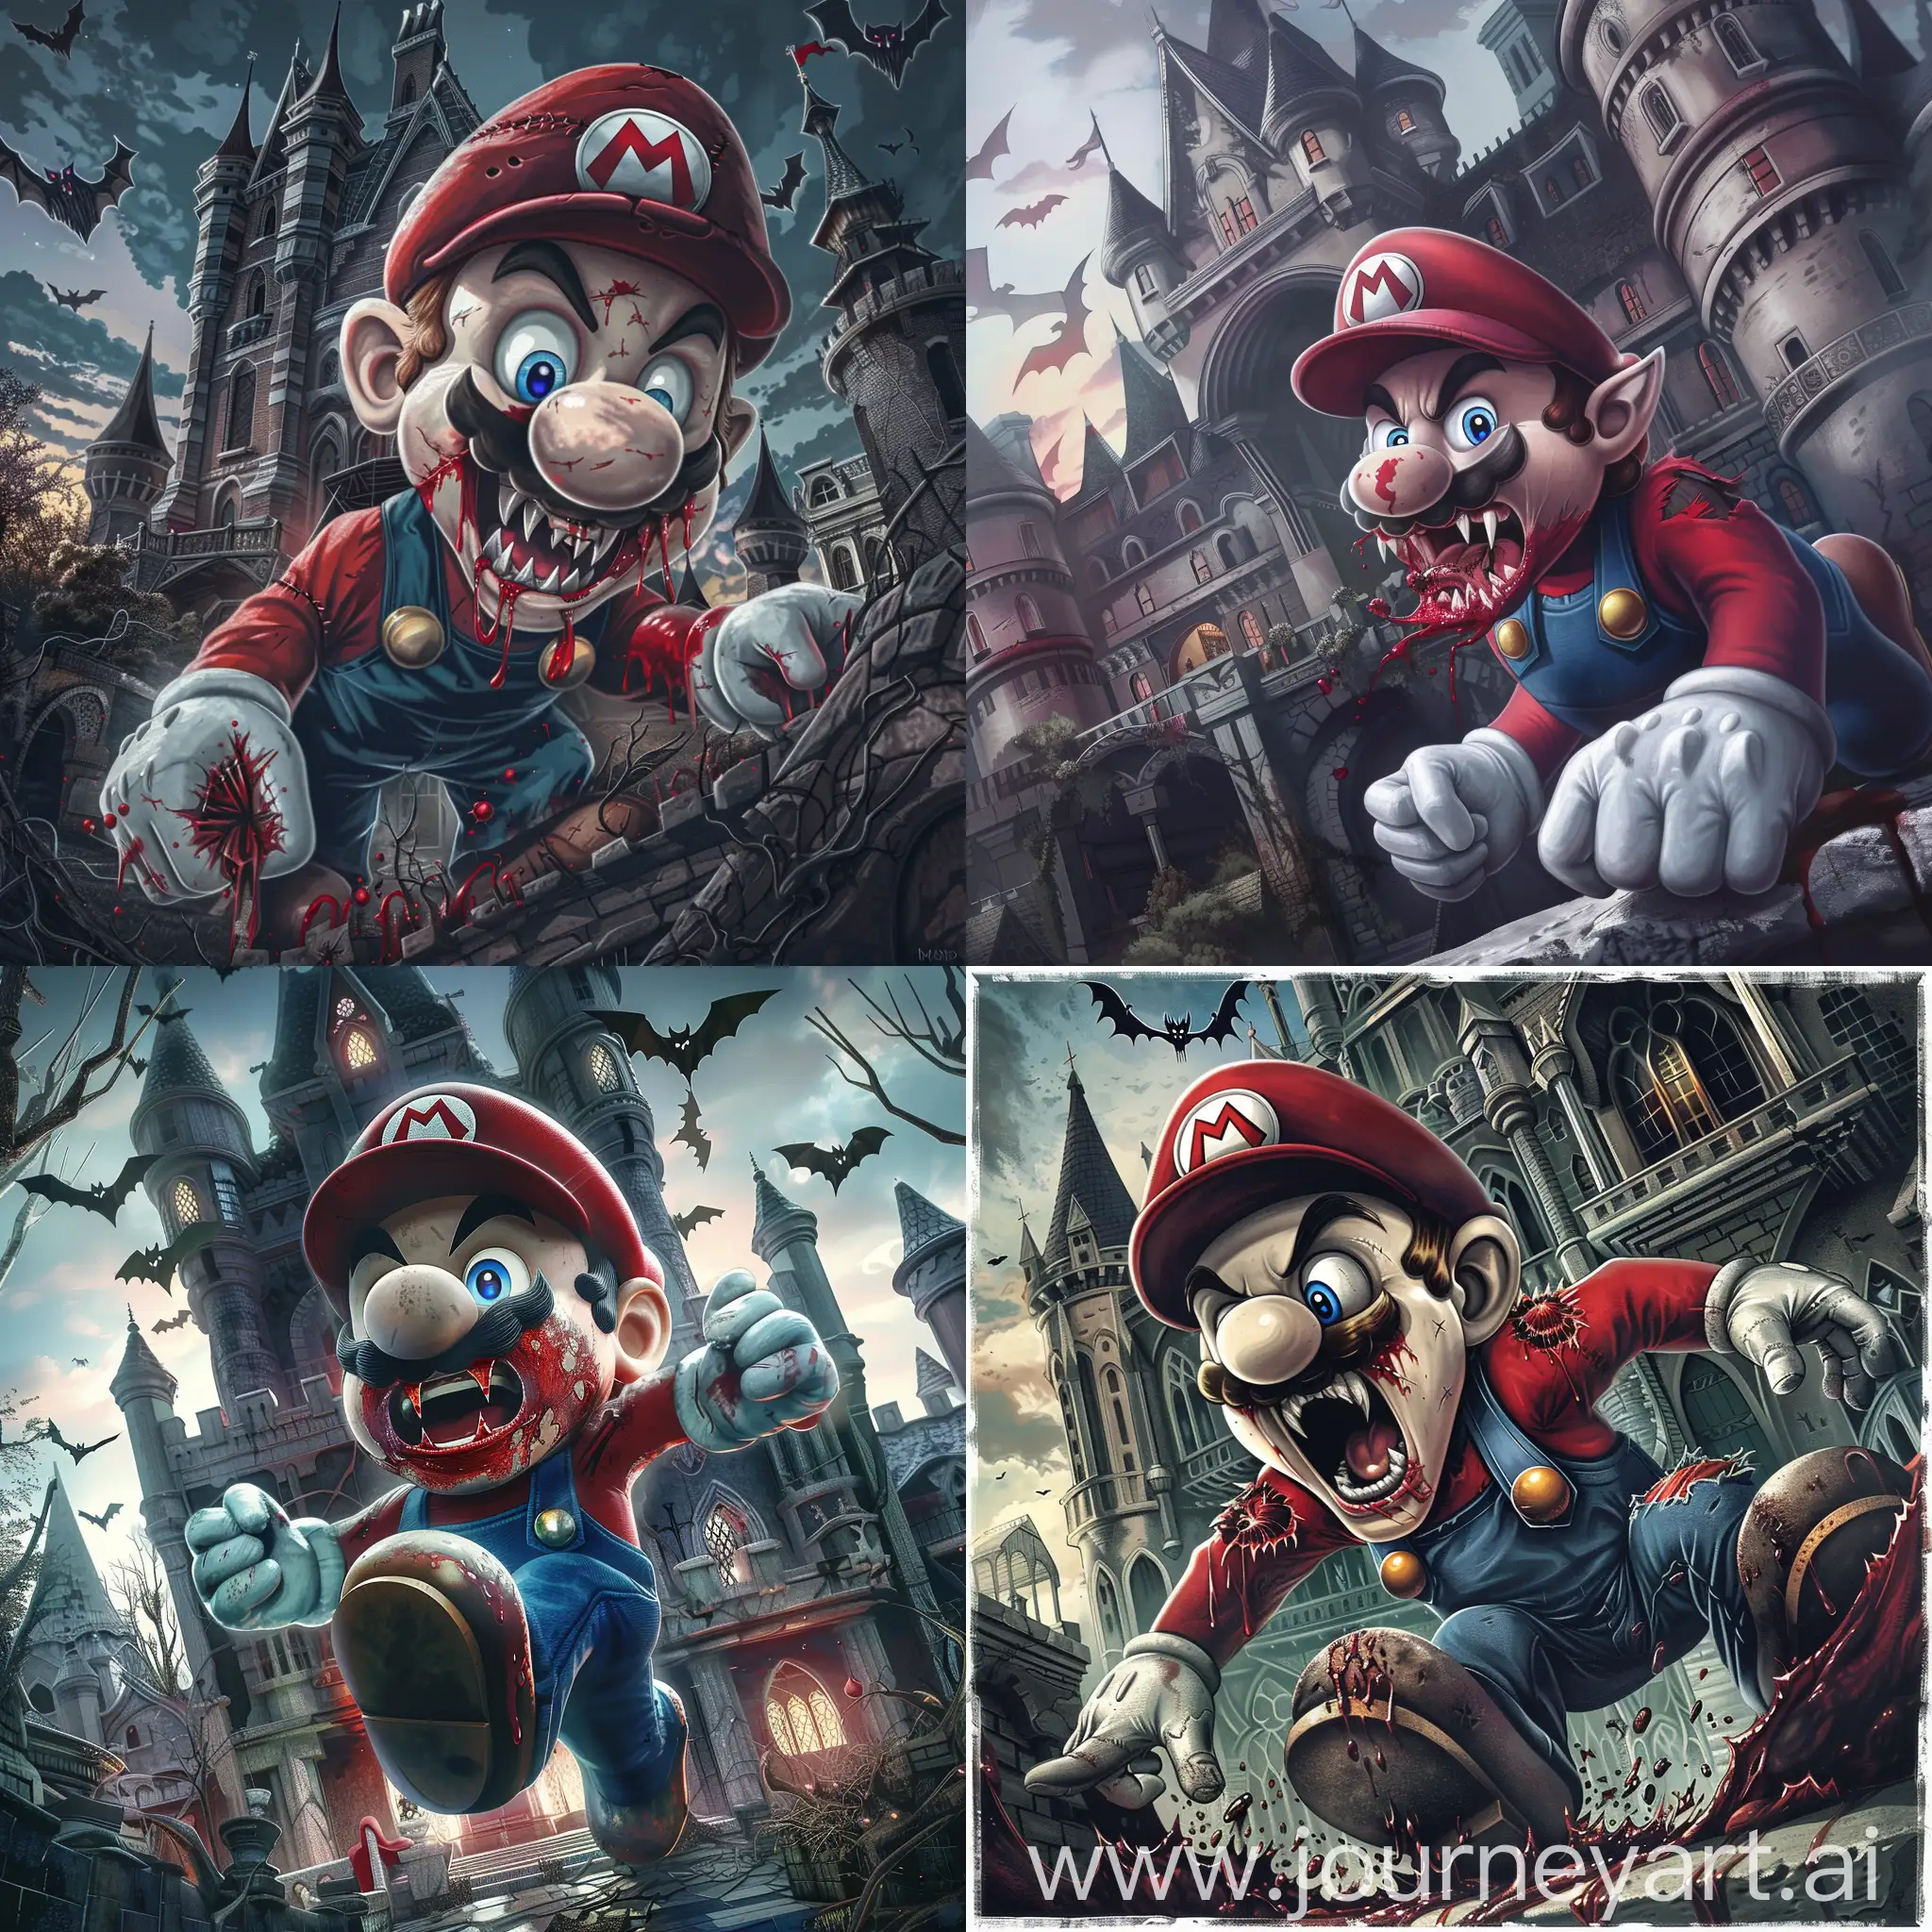 Digital art of Super Mario as a vampire, in a gothic castle, vampire fangs, blood, impressive detailed, digital art